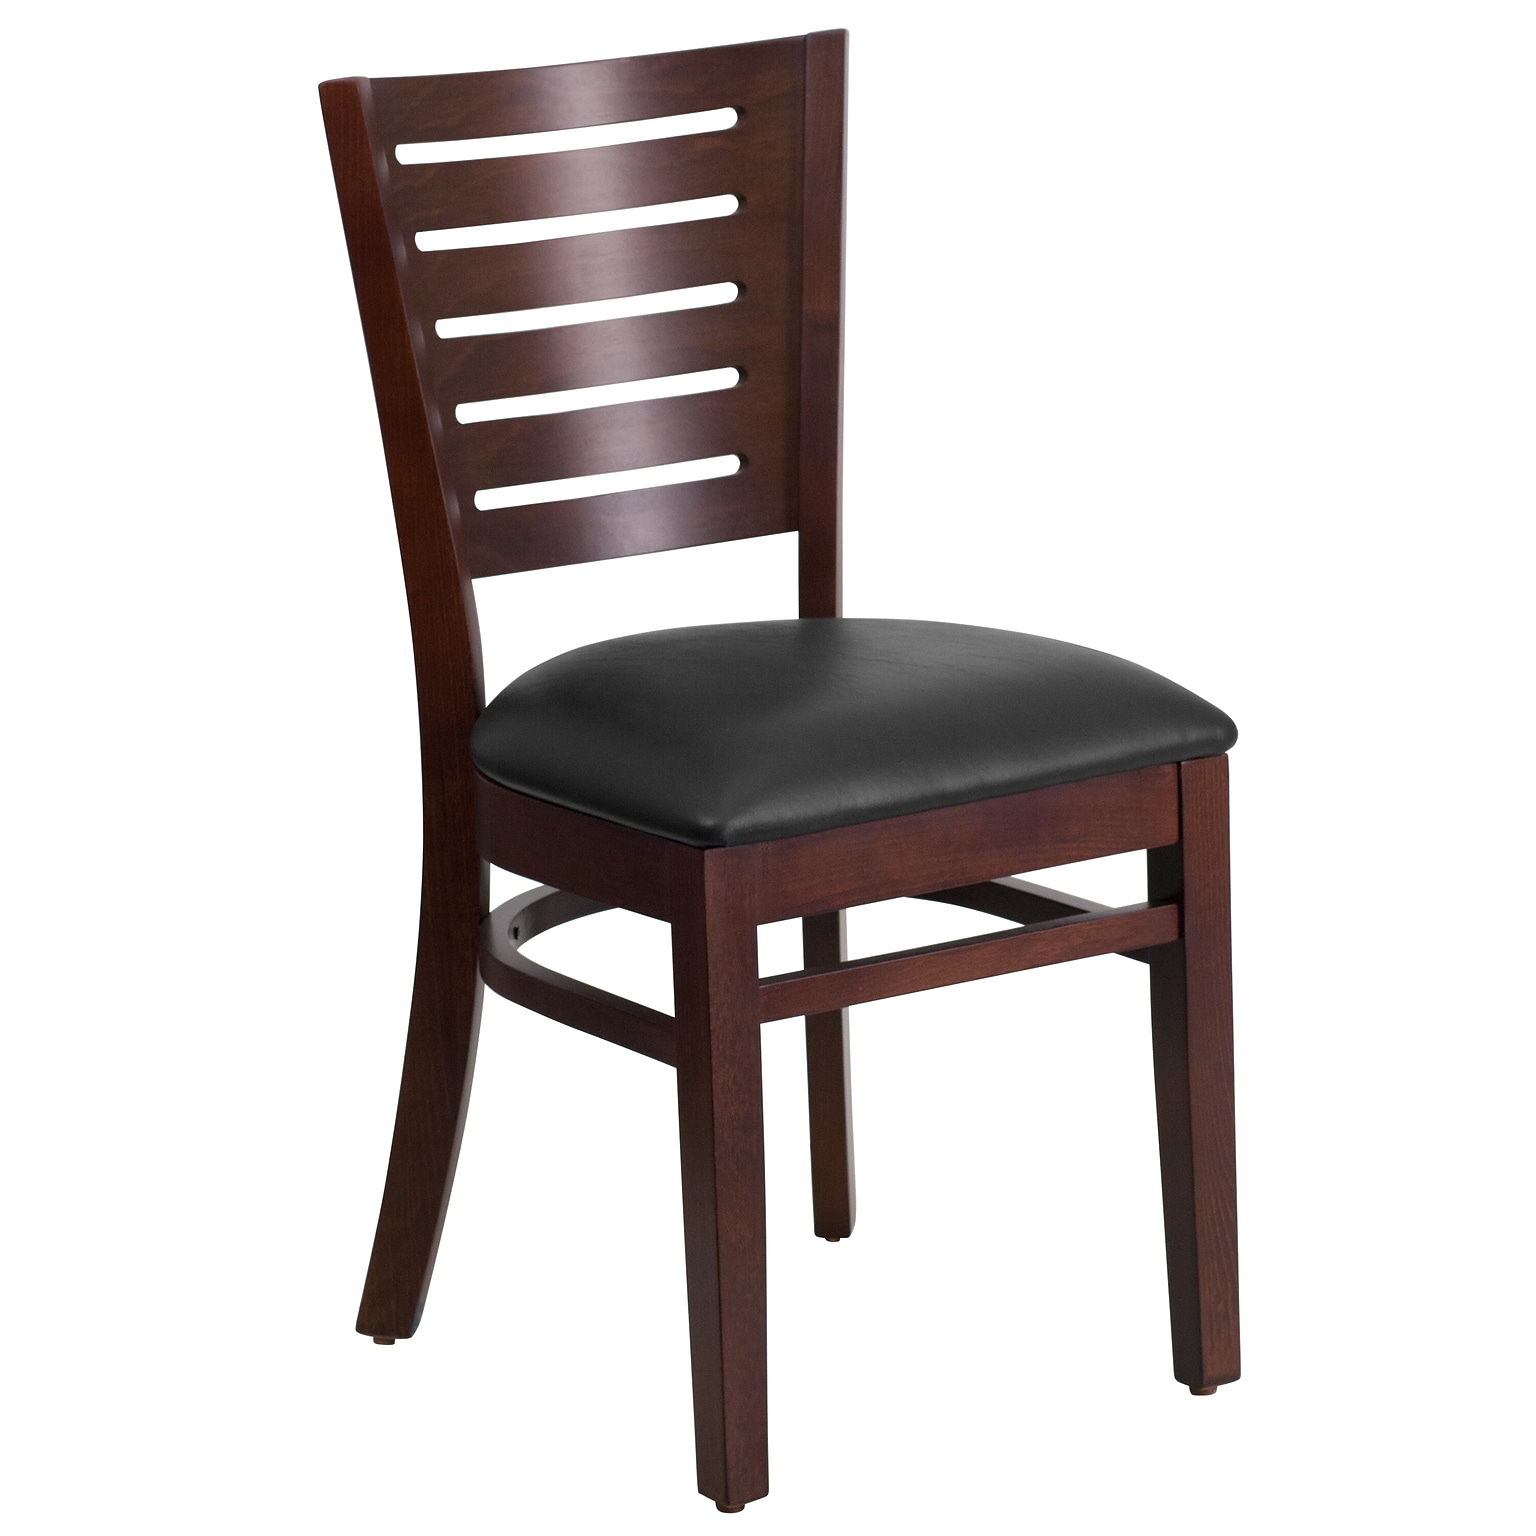 Flash Furniture Darby Traditional Vinyl & Wood Slat Back Restaurant Dining Chair, Walnut/Black (XUDGW018WALBKV)